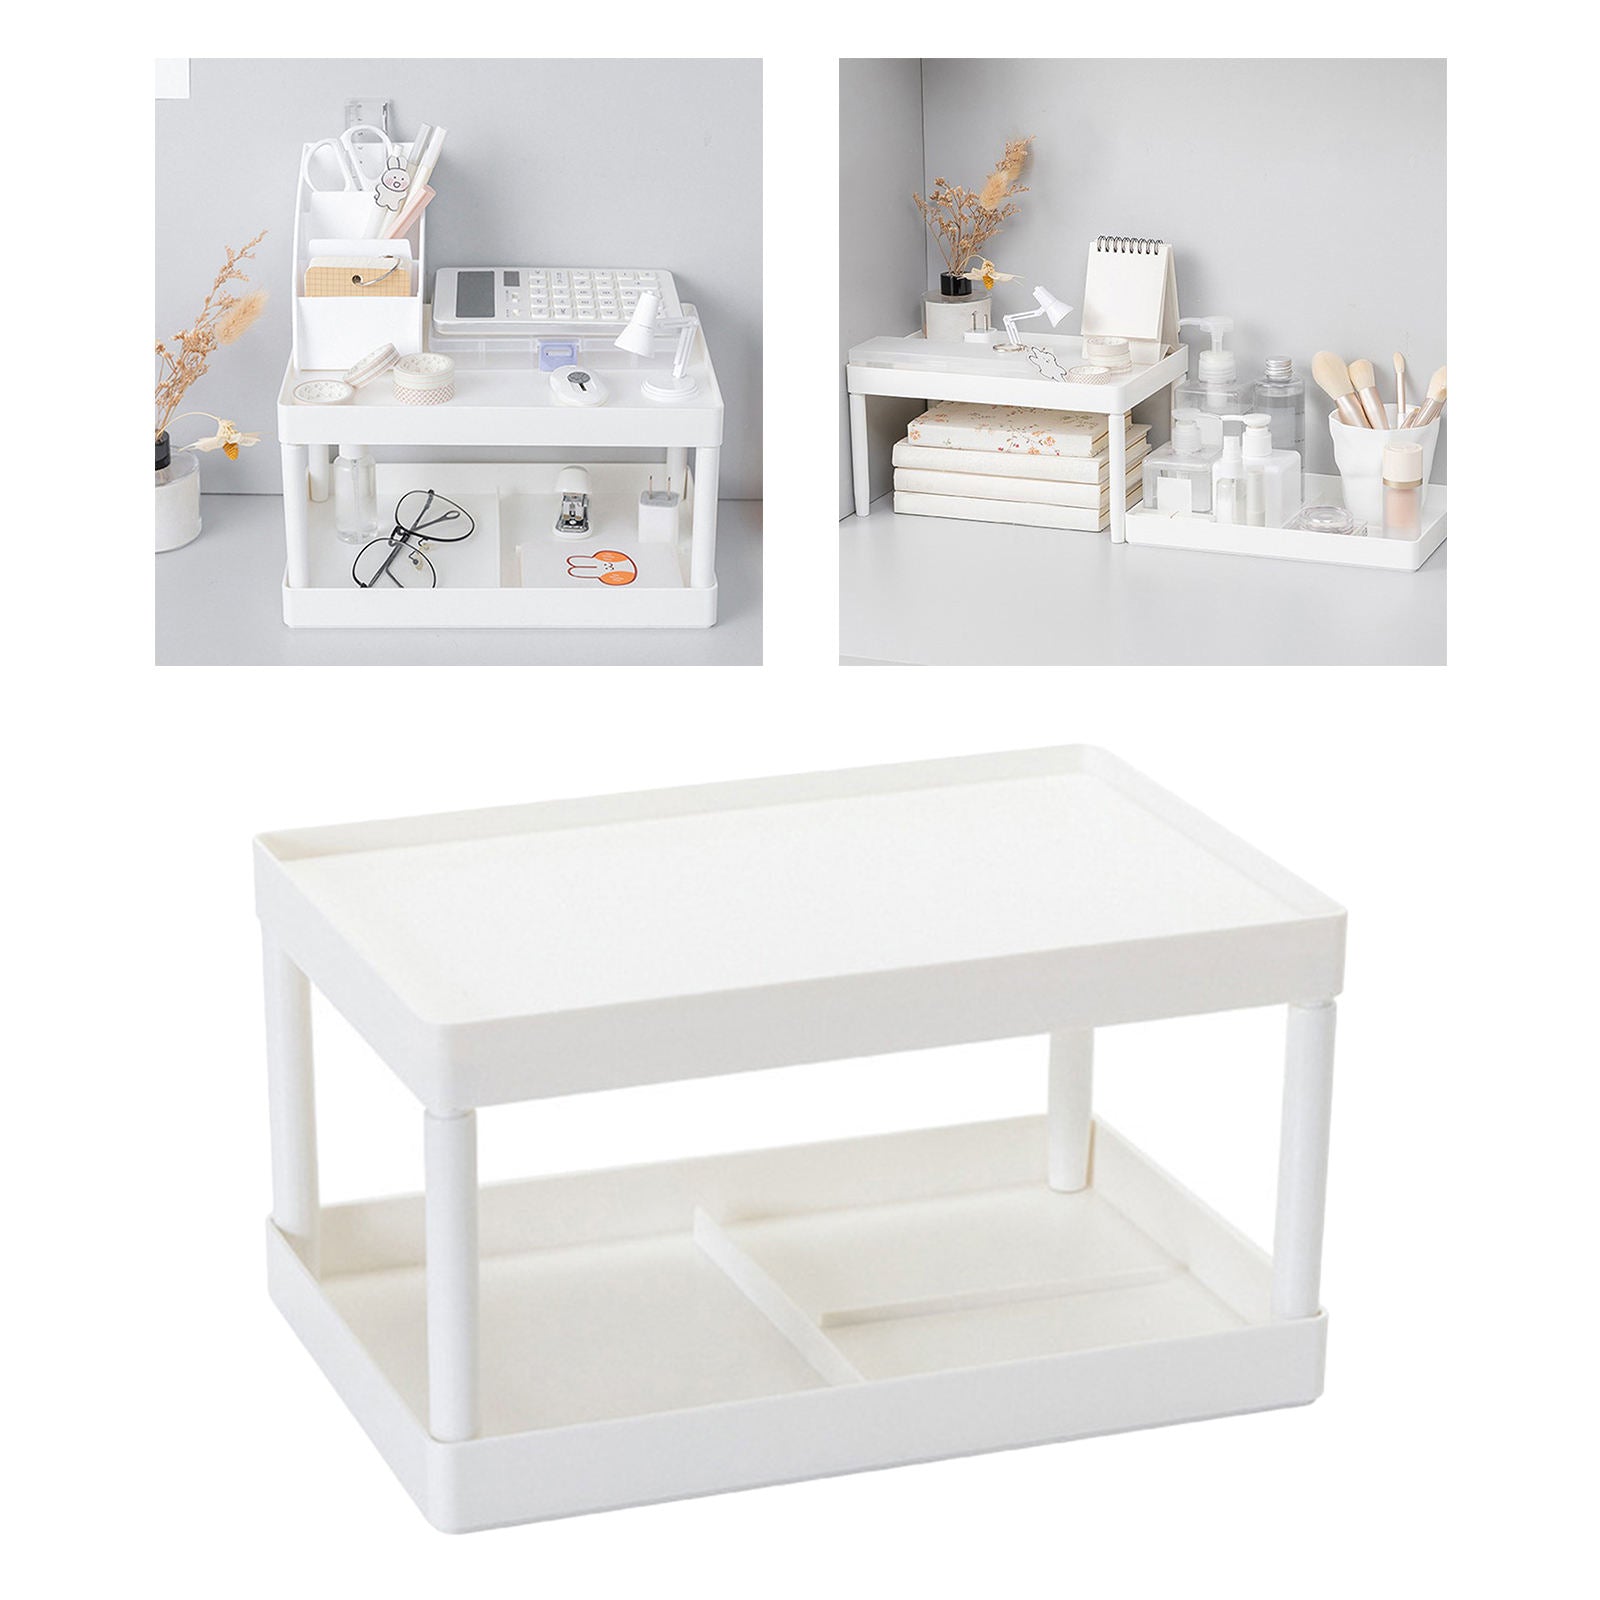 2 Layer Desk Table Organizer Holder Countertop Storage Shelf for Dorm Room